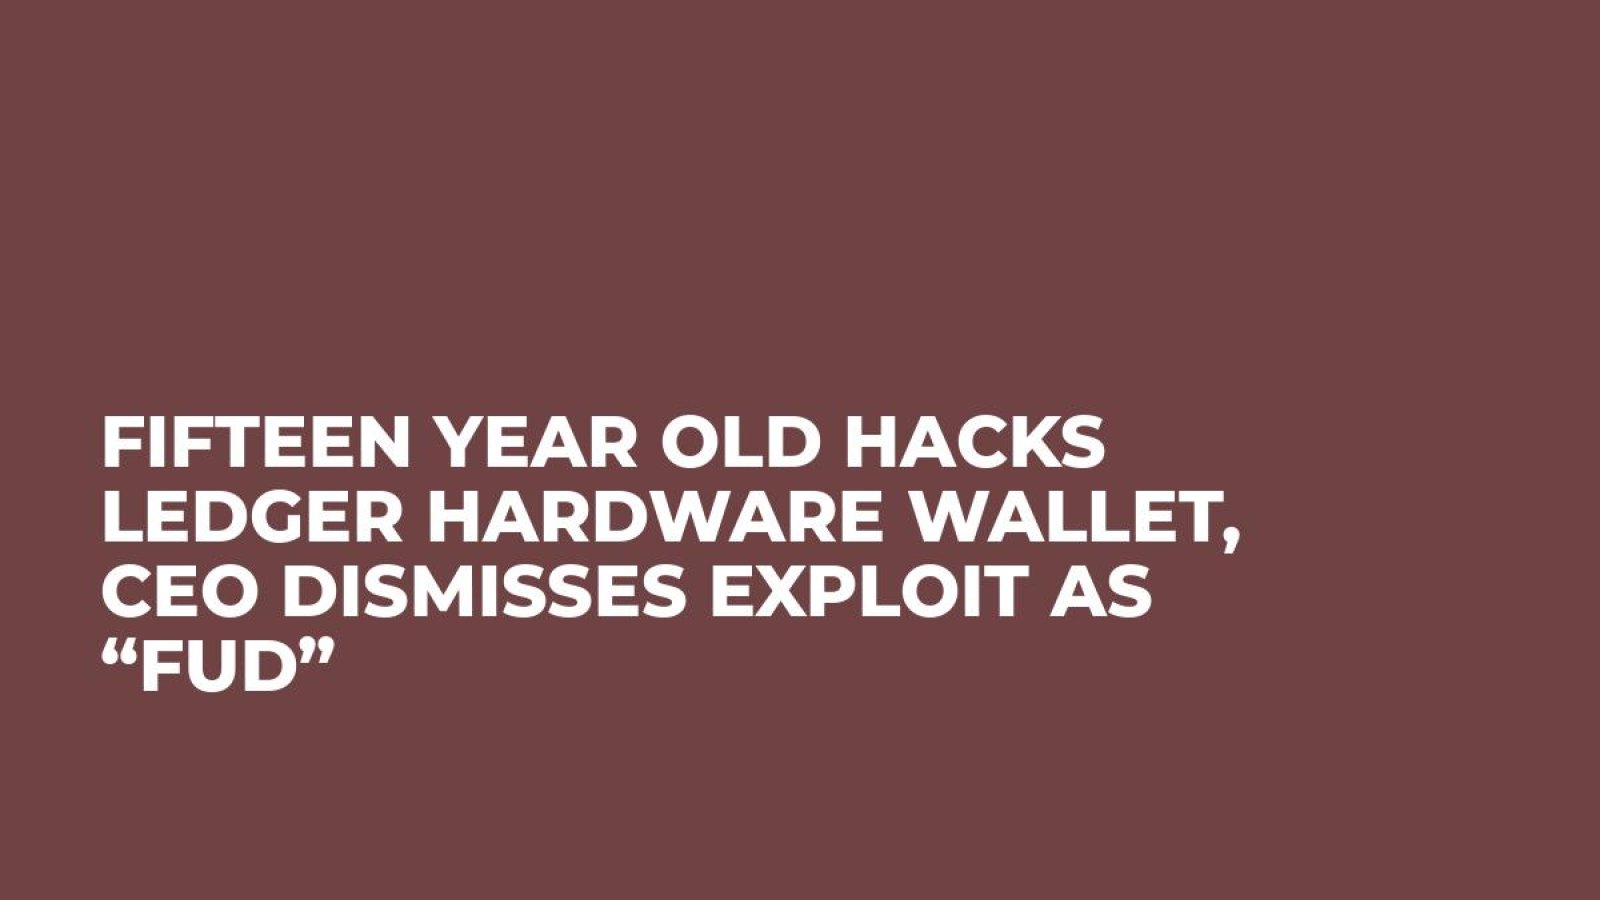 Fifteen Year Old Hacks Ledger Hardware Wallet, CEO Dismisses Exploit as “FUD”